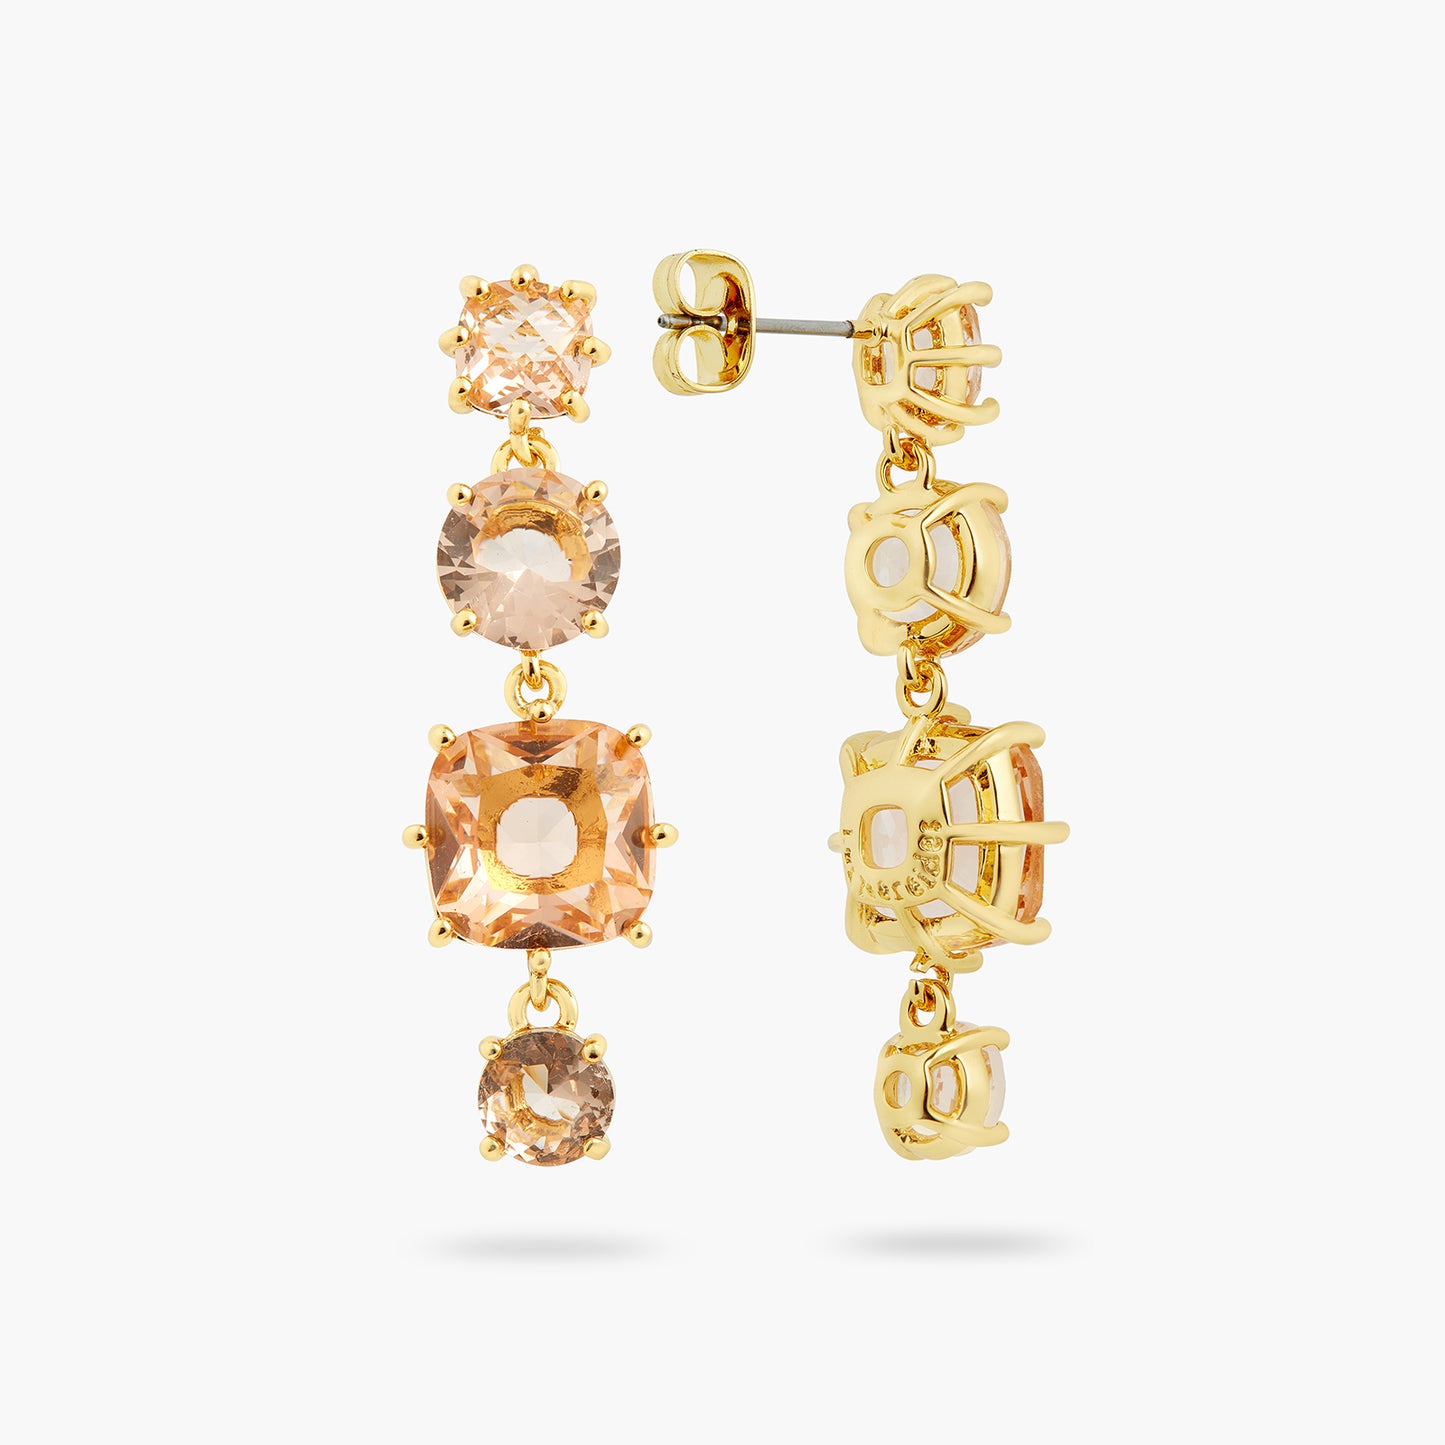 Apricot Pink Diamantine 4 Stone Dangling Earrings | ATLD1201